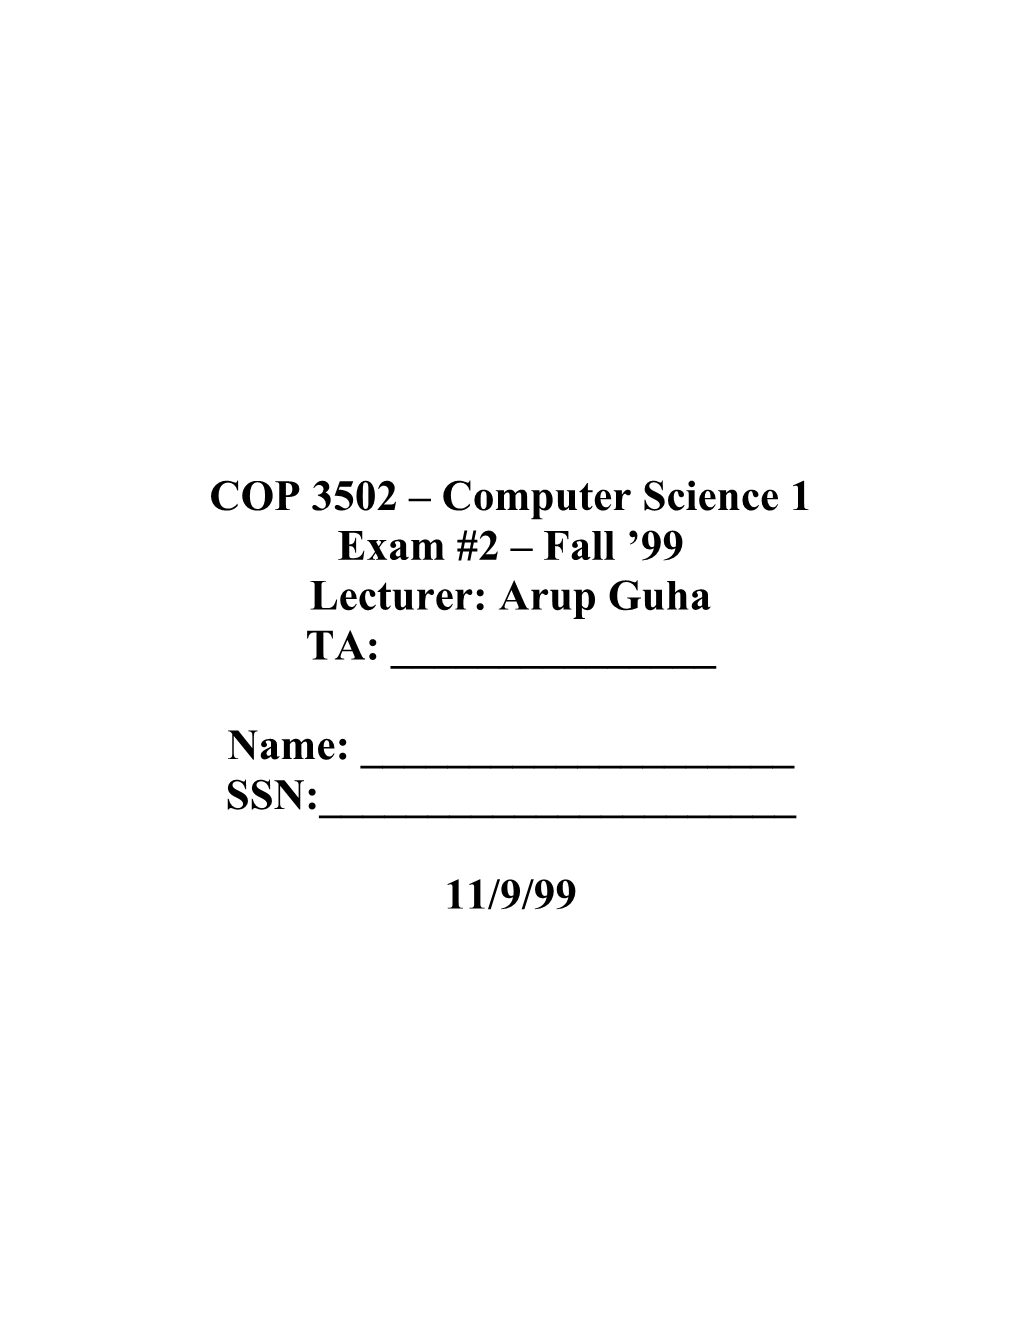 COP 3502 Computer Science 1